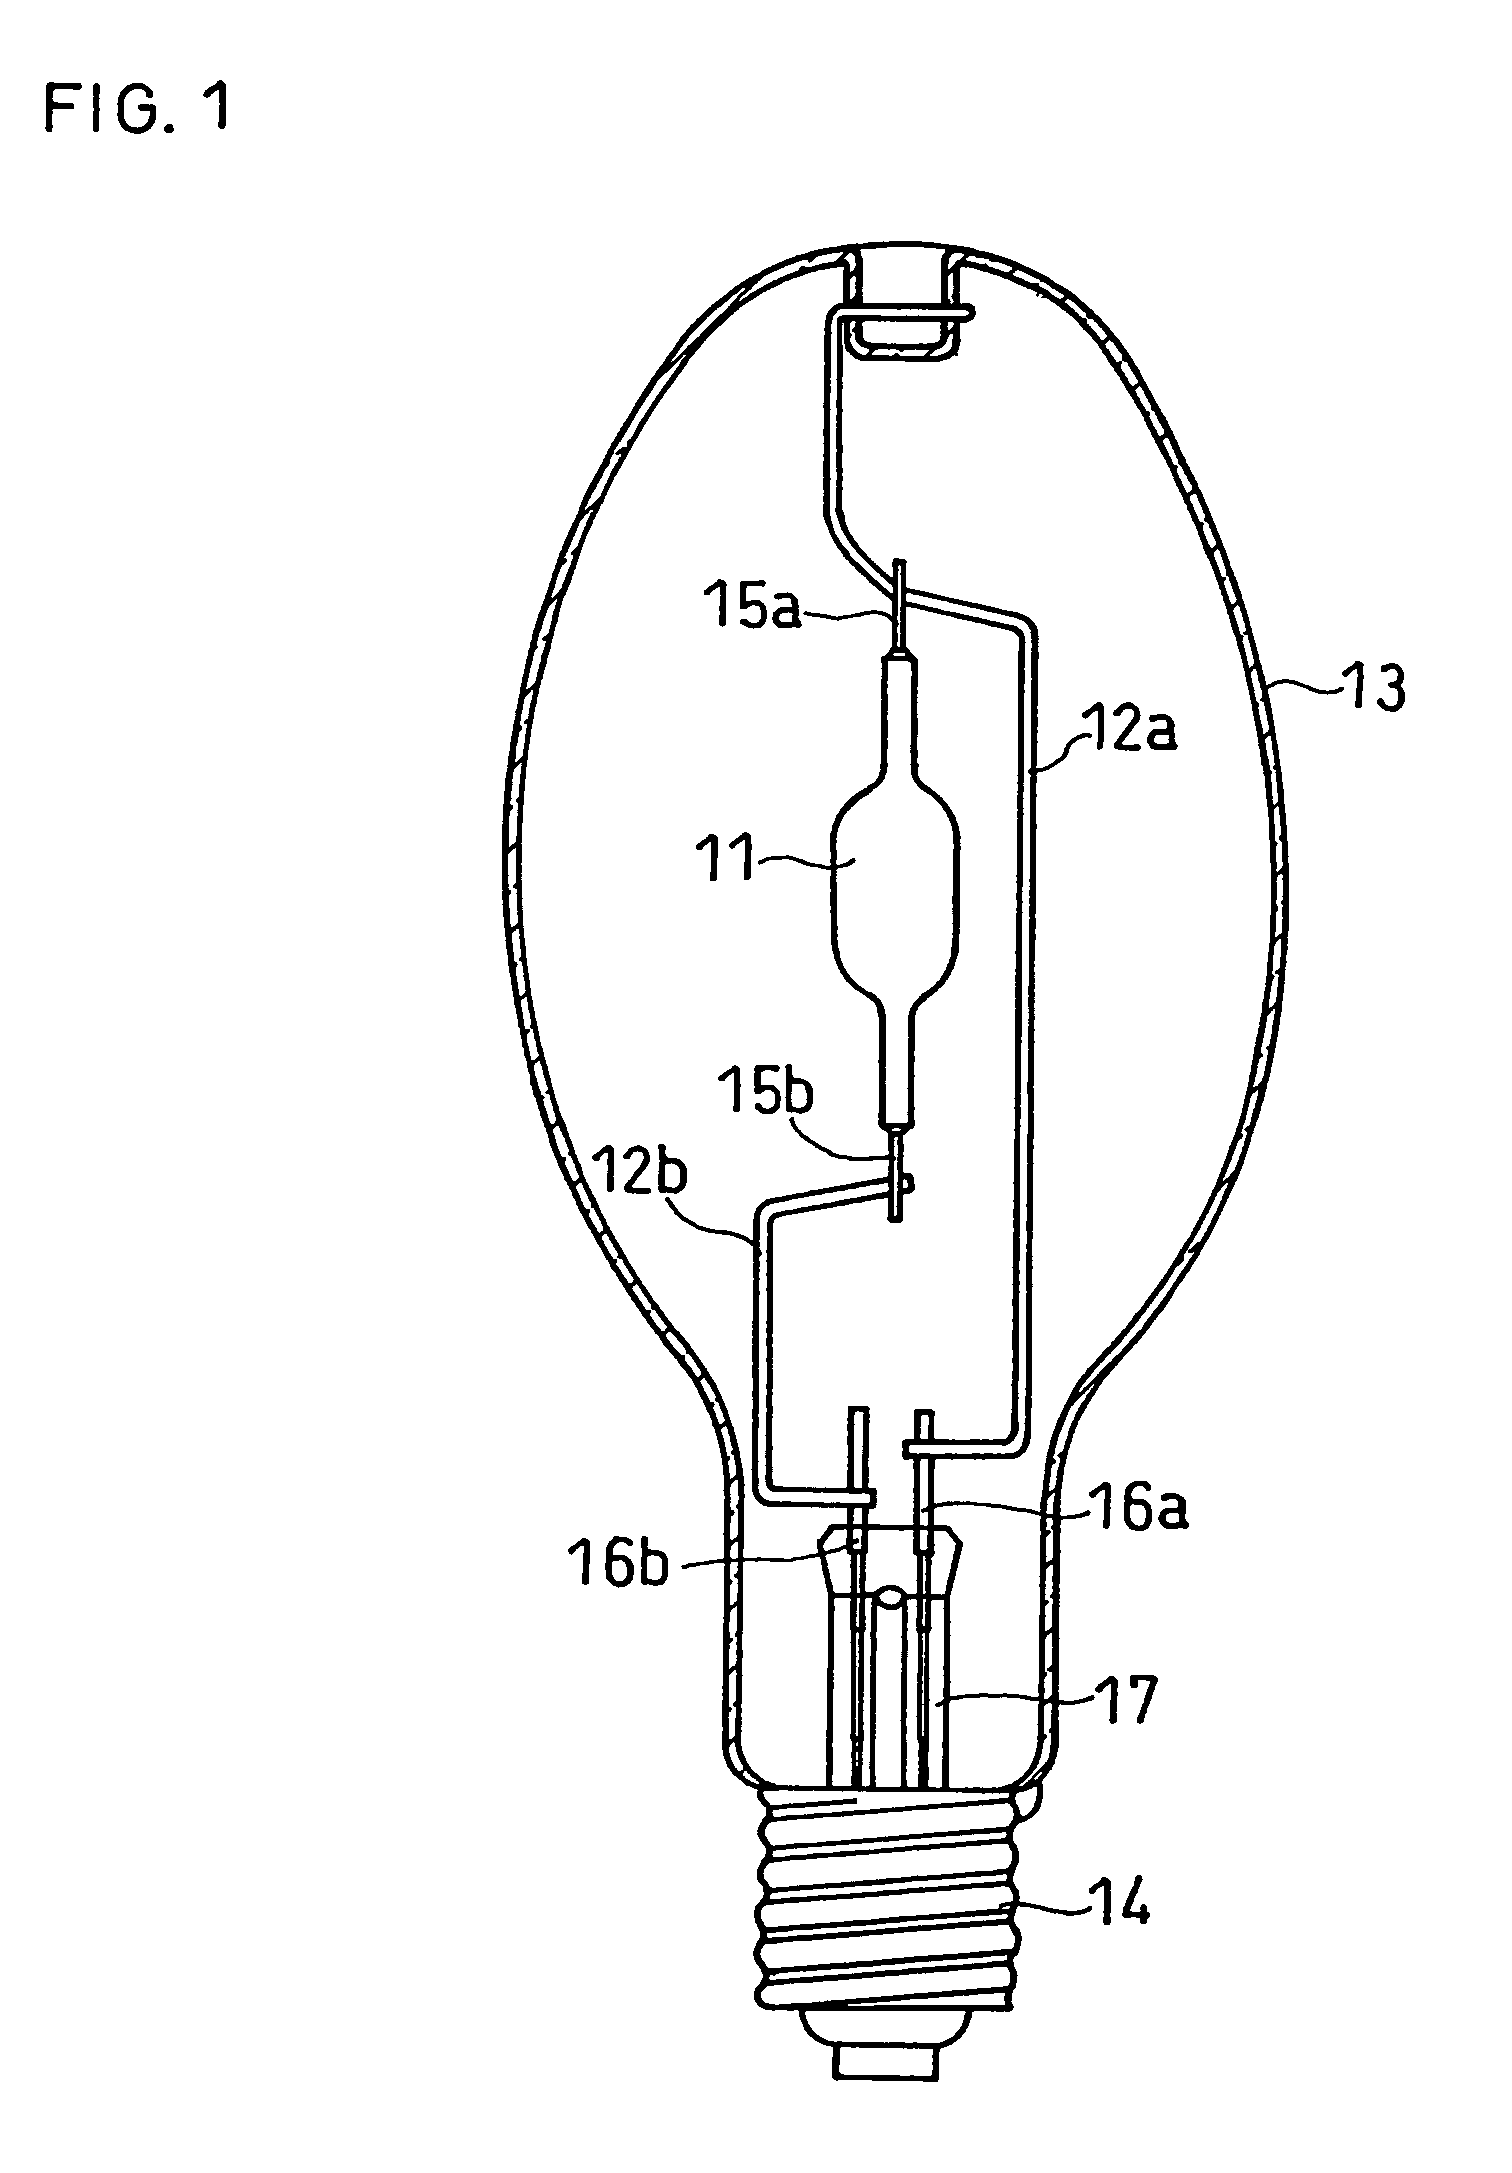 Metal vapor discharge lamp having configured envelope for stable luminous characteristics